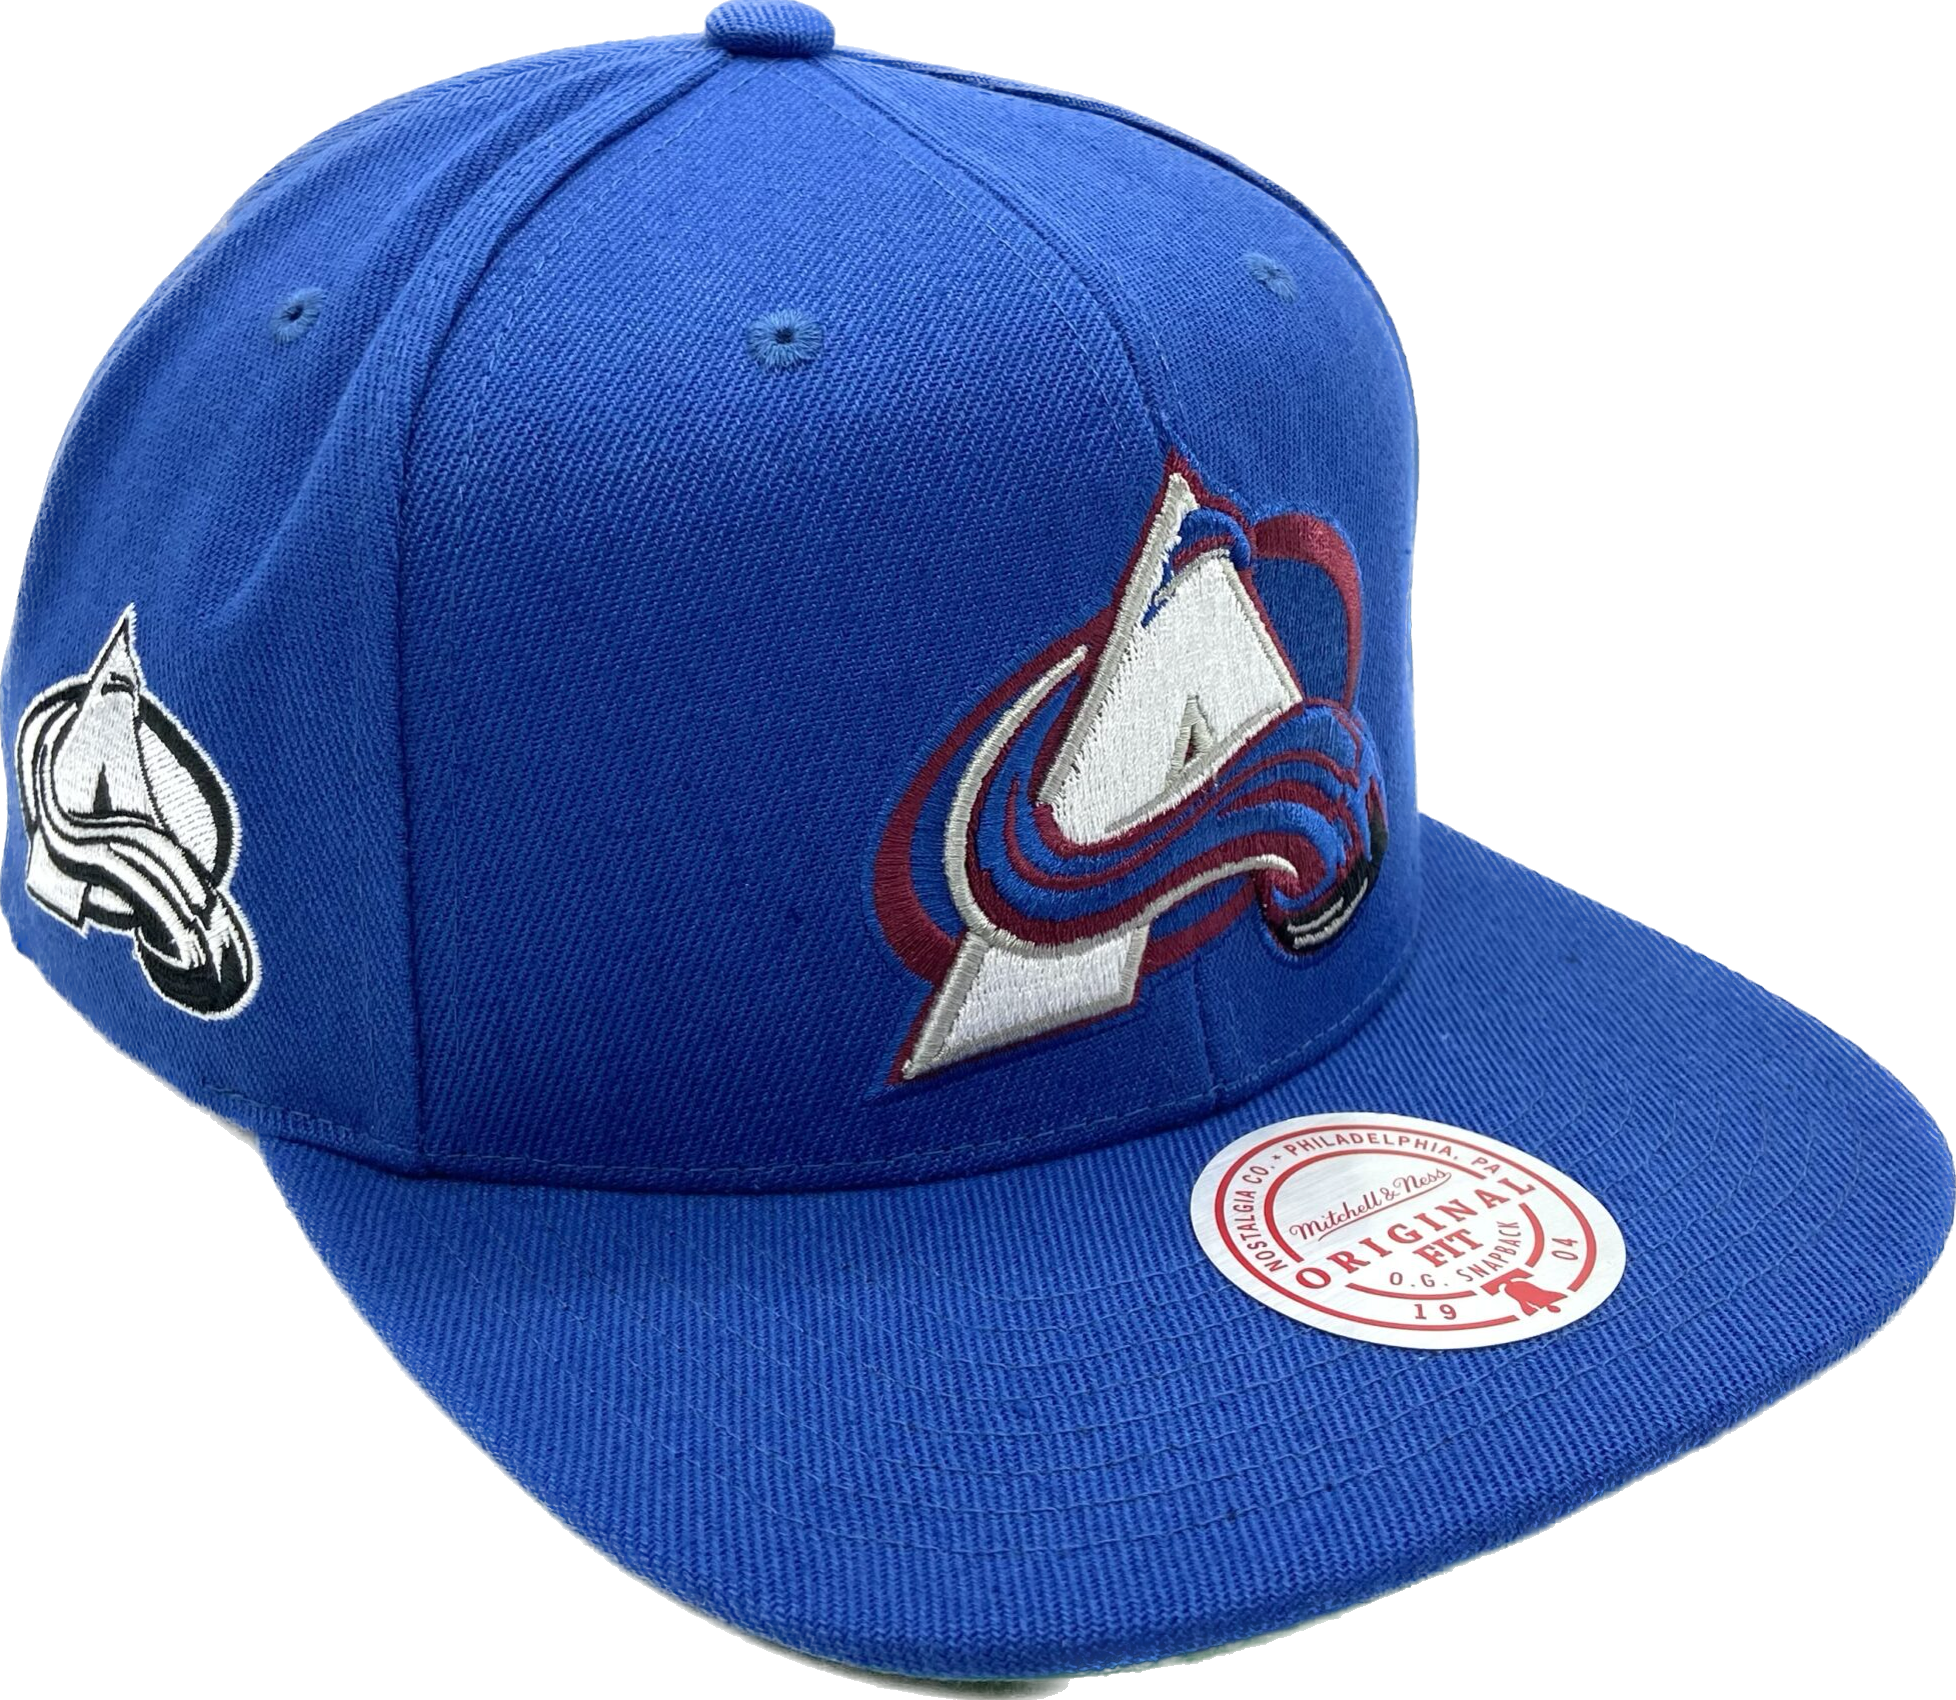 Authentic Mitchell & Ness Colorado Avalanche Snapback Hat, Men's